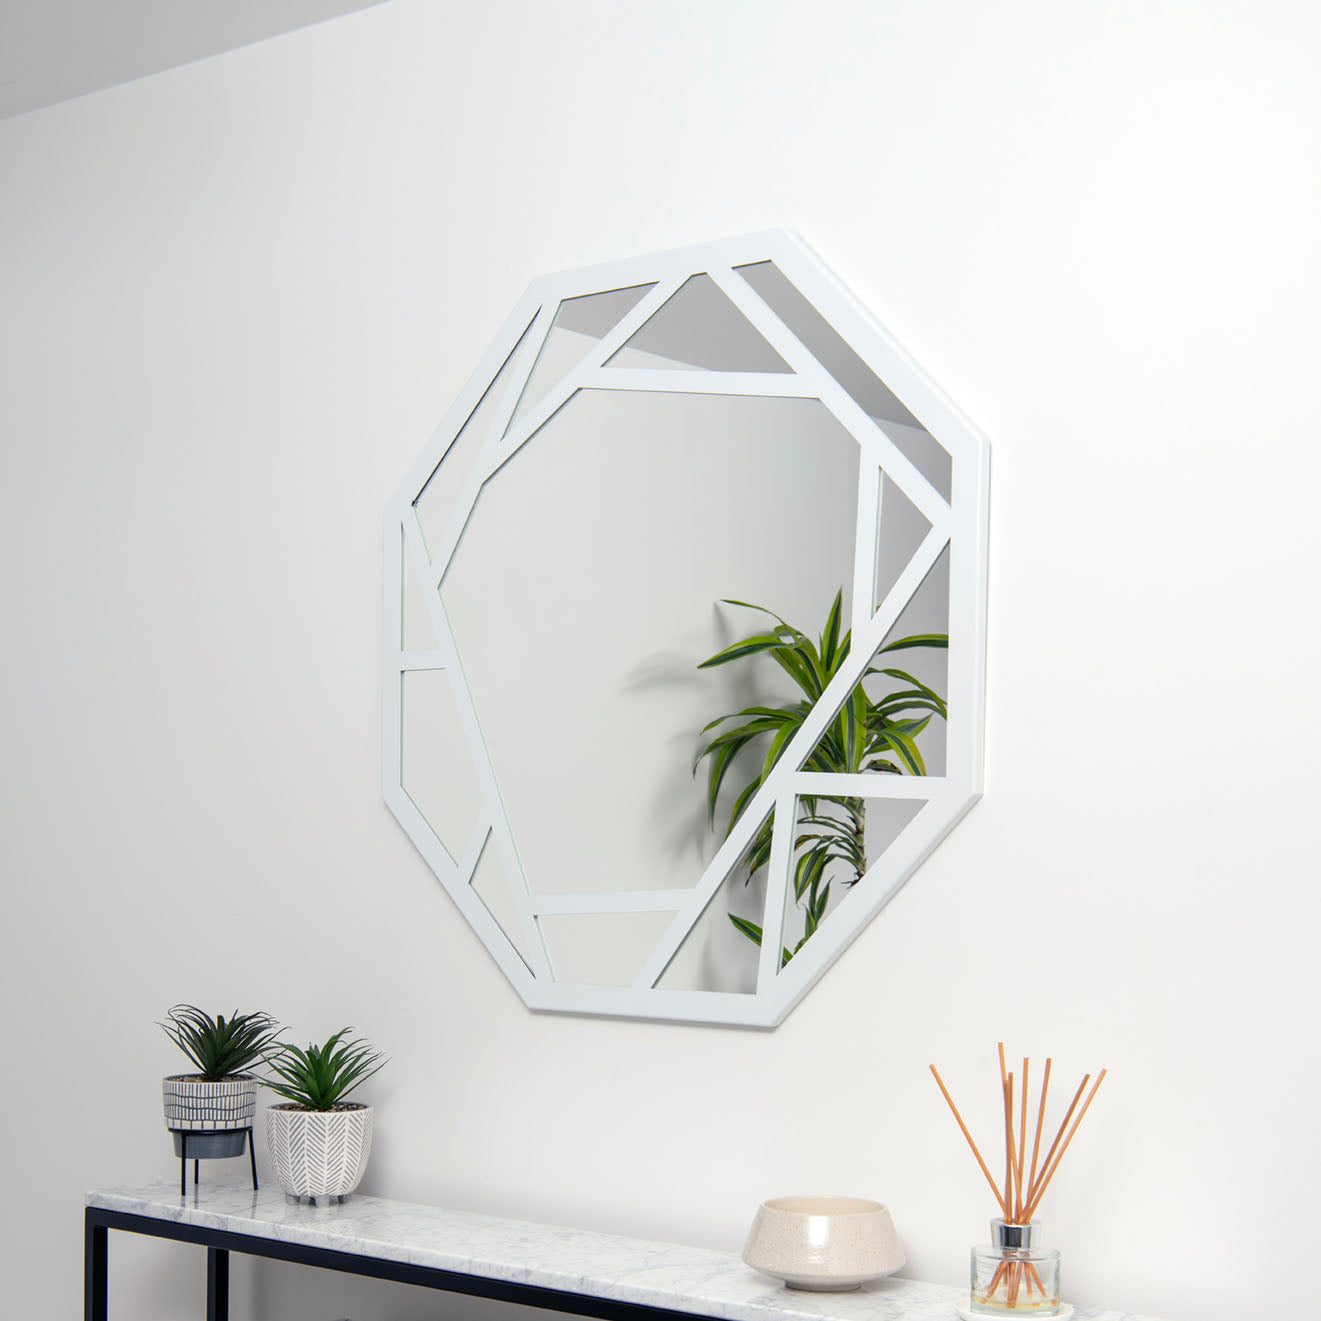 Abstract Geometric Wall Mirror - RESS Furniture Ltd. White Gloss